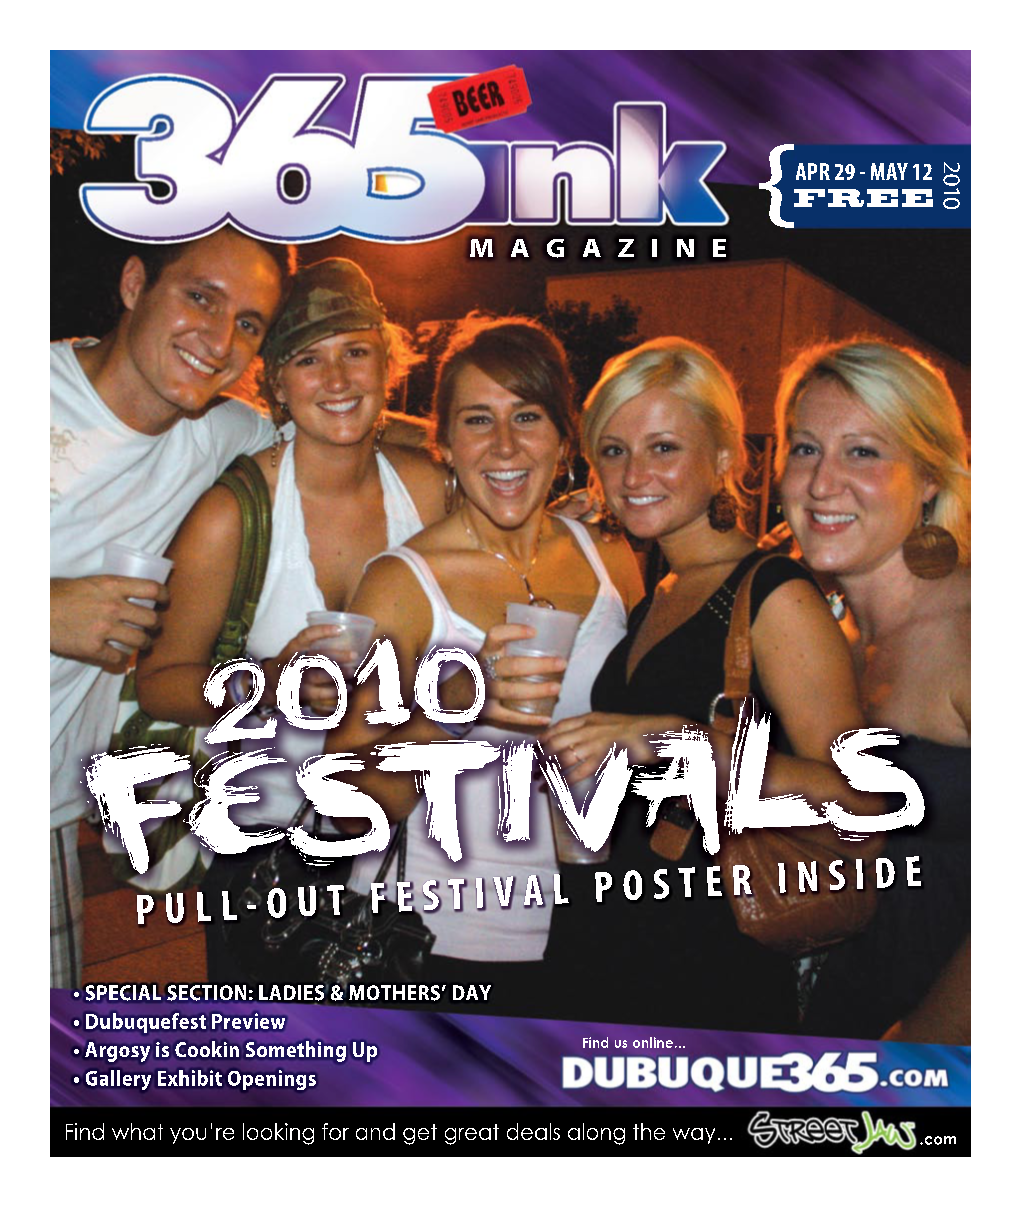 2010 Festivals